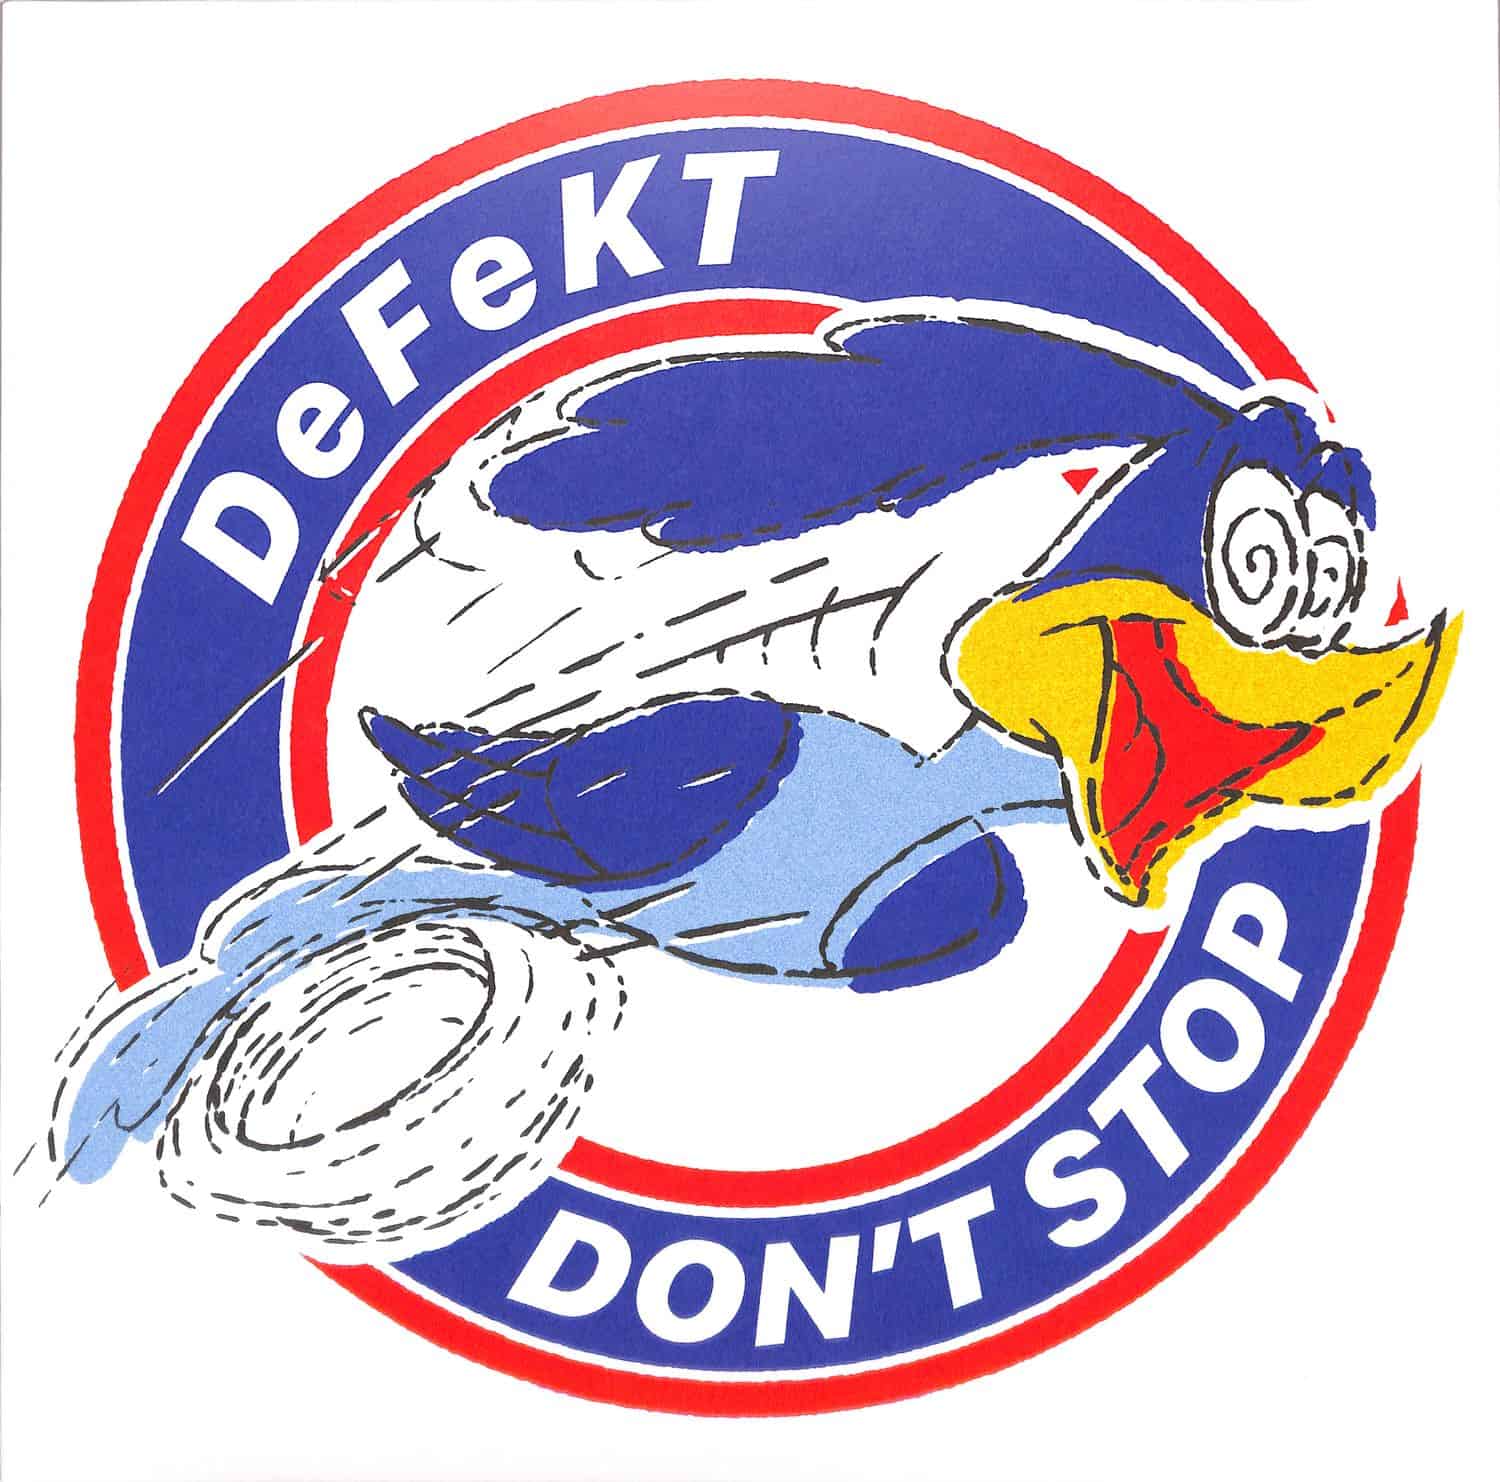 DeFeKT - DONT STOP